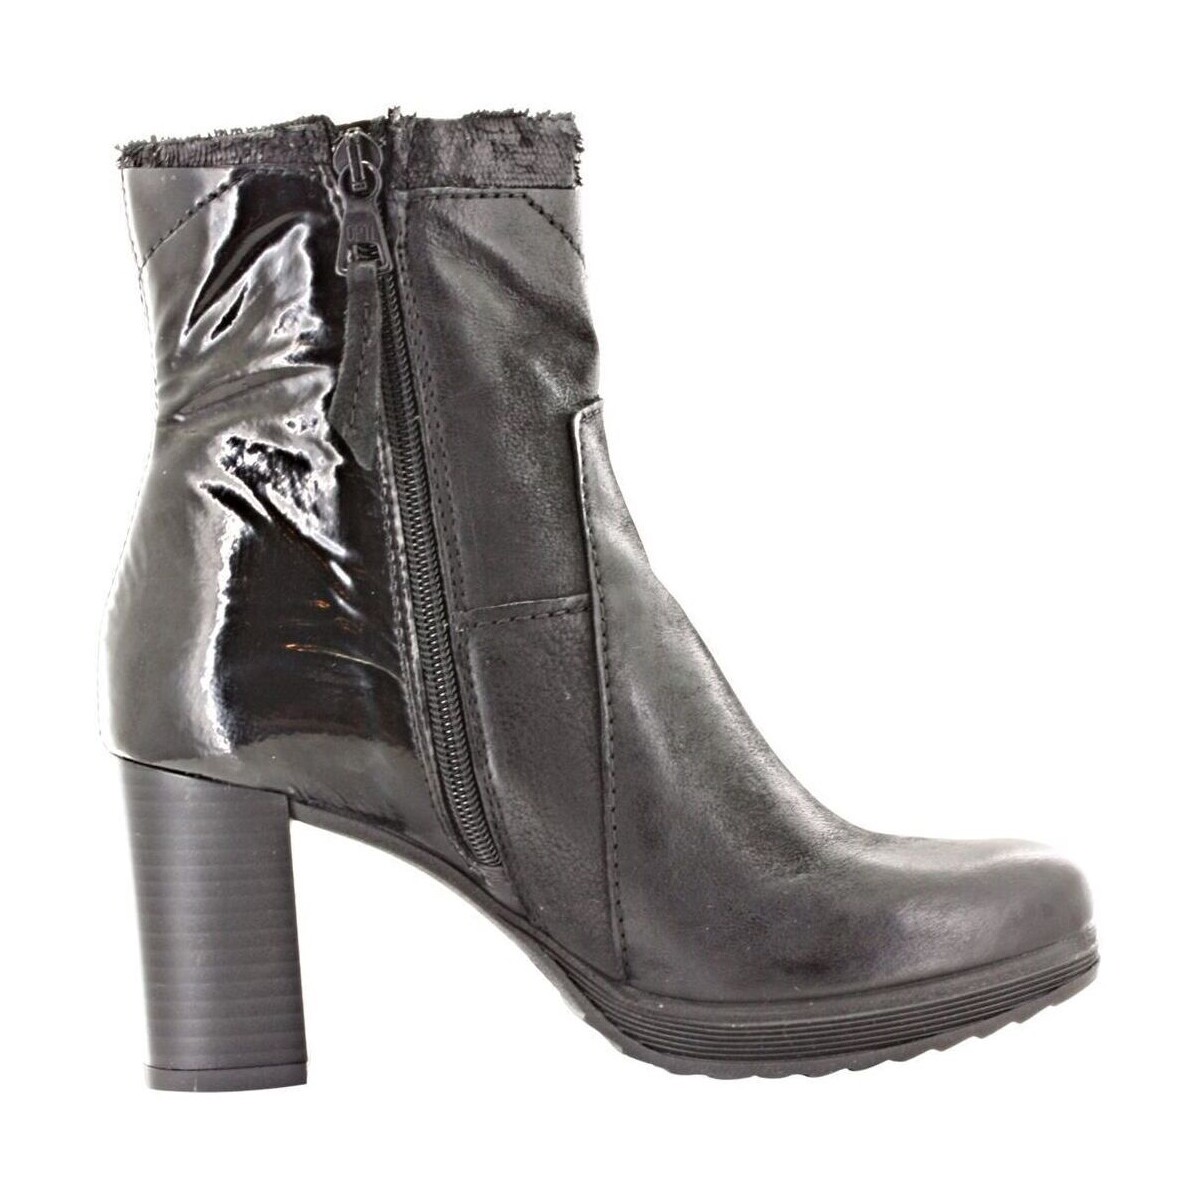 Chaussures Femme Bottines Mjus 101-6002 Noir